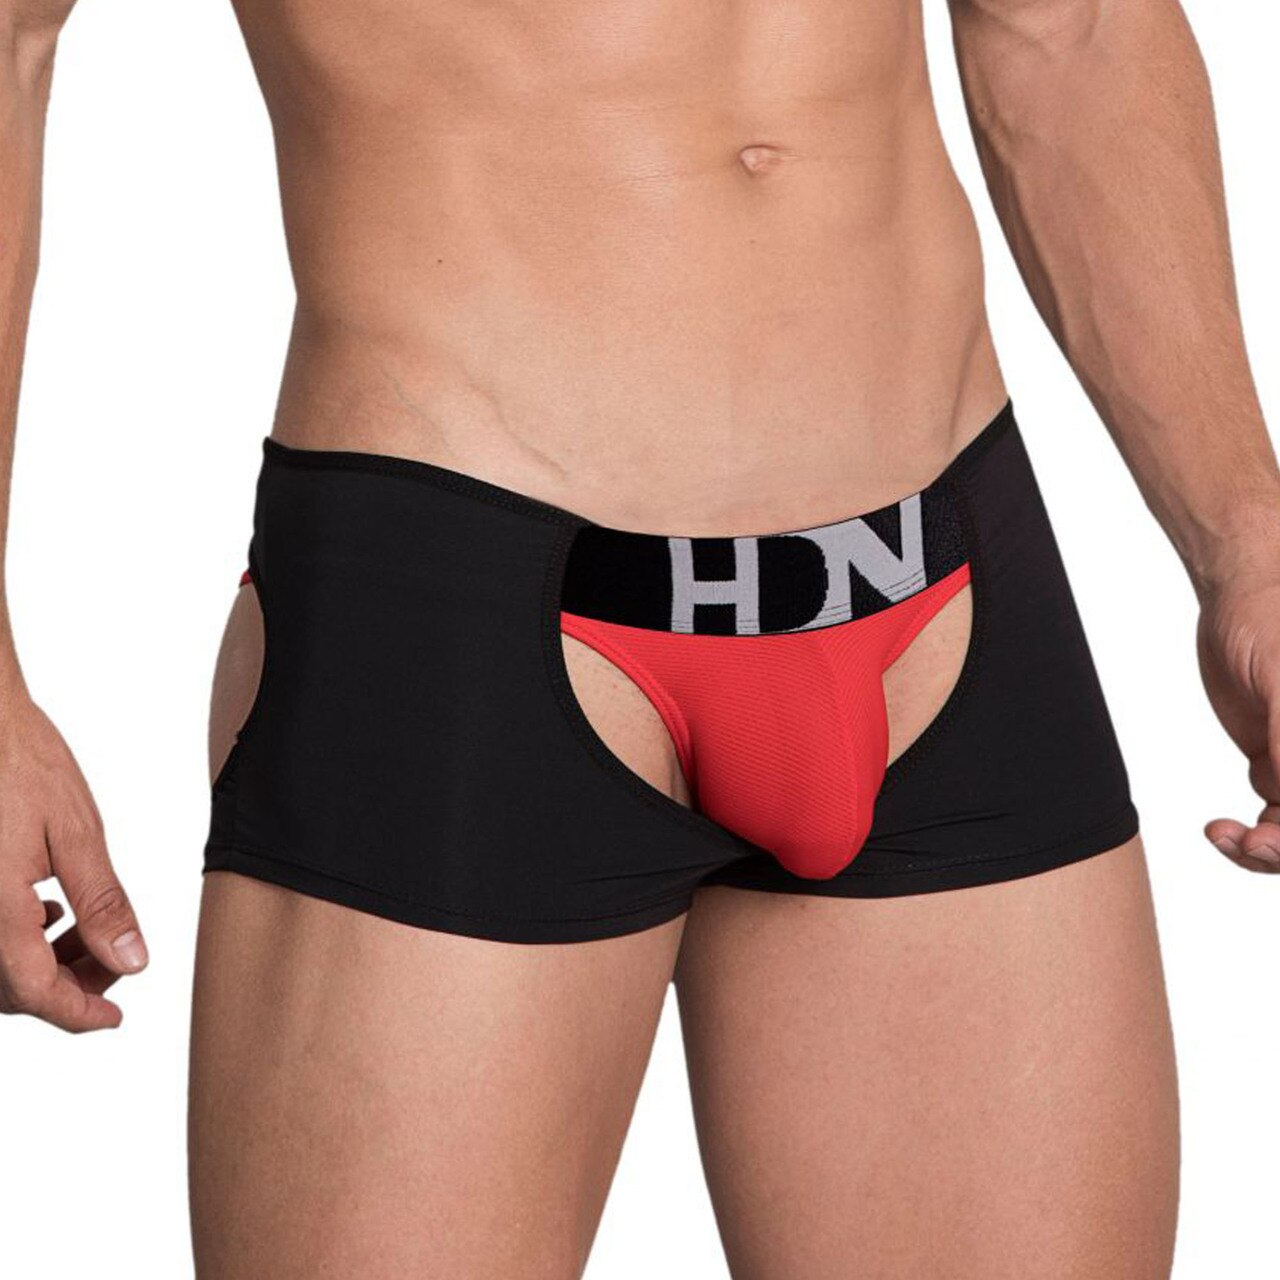 SALE - Mens Hidden Seduction Open Front & Back Hot Pants Shorts Black & Red